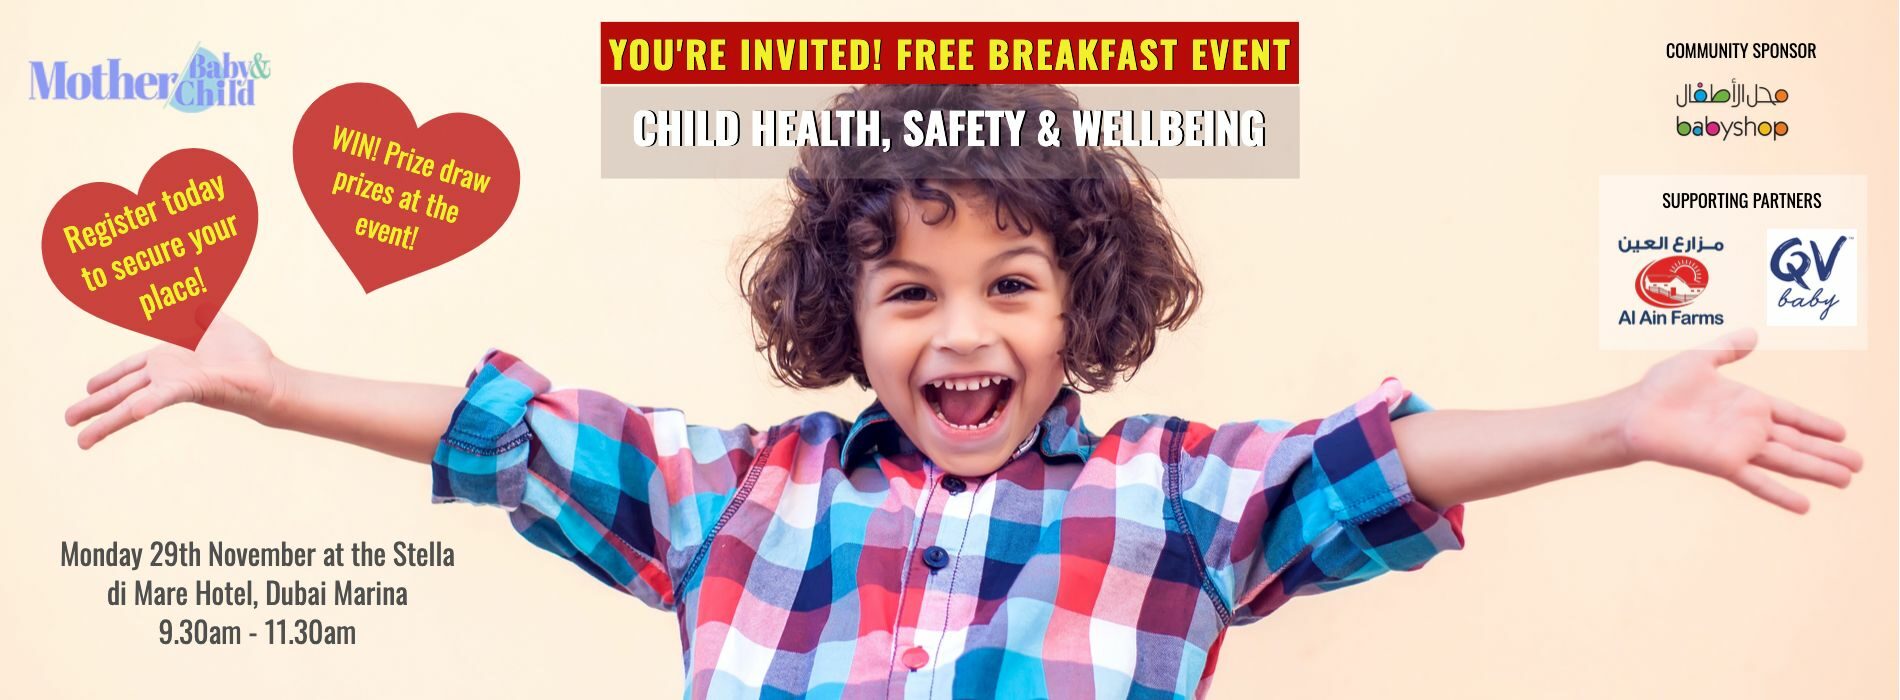 INVITATION! Free Breakfast Event: Child Health, Safety & Wellbeing